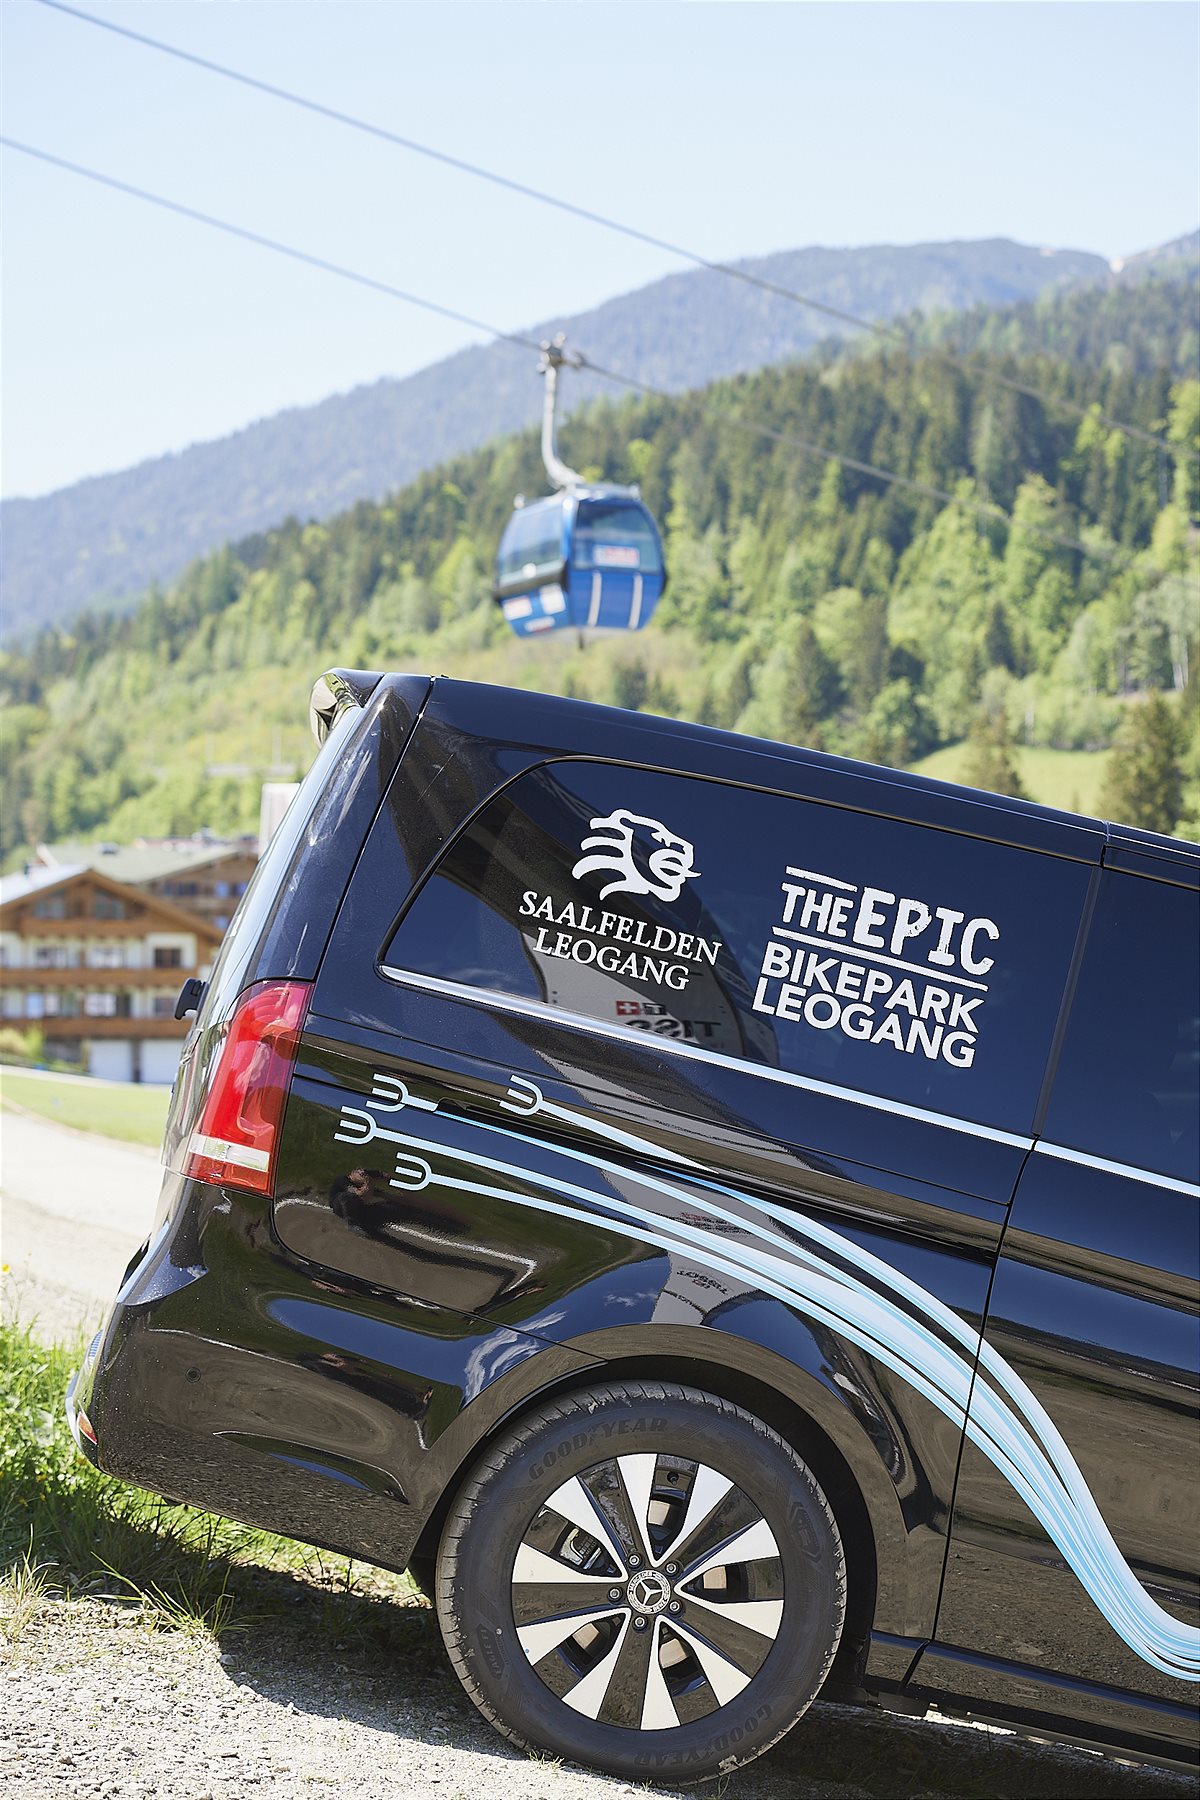 Mercedes-Benz elektrifiziert die Tourismusregion Saalfelden Leongang